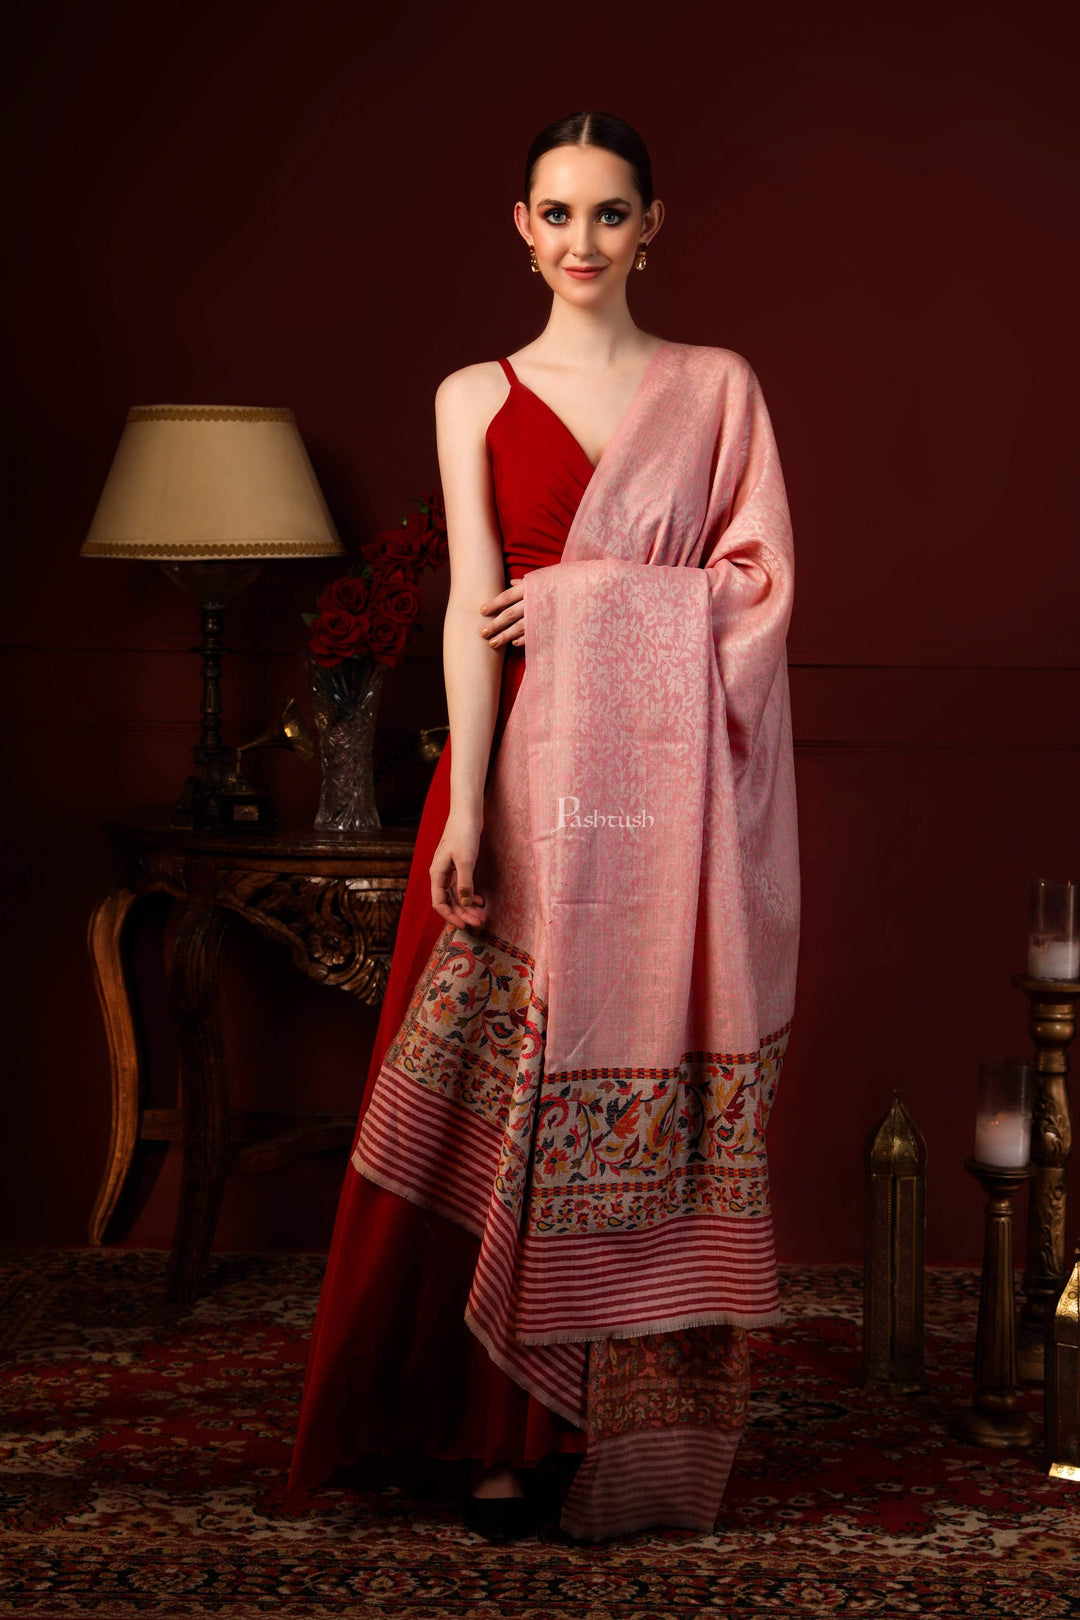 Pashtush India 100x200 Pashtush Women's Soft Wool Cashmere Blended Shawl, Ethnic Palla, Blush Pink